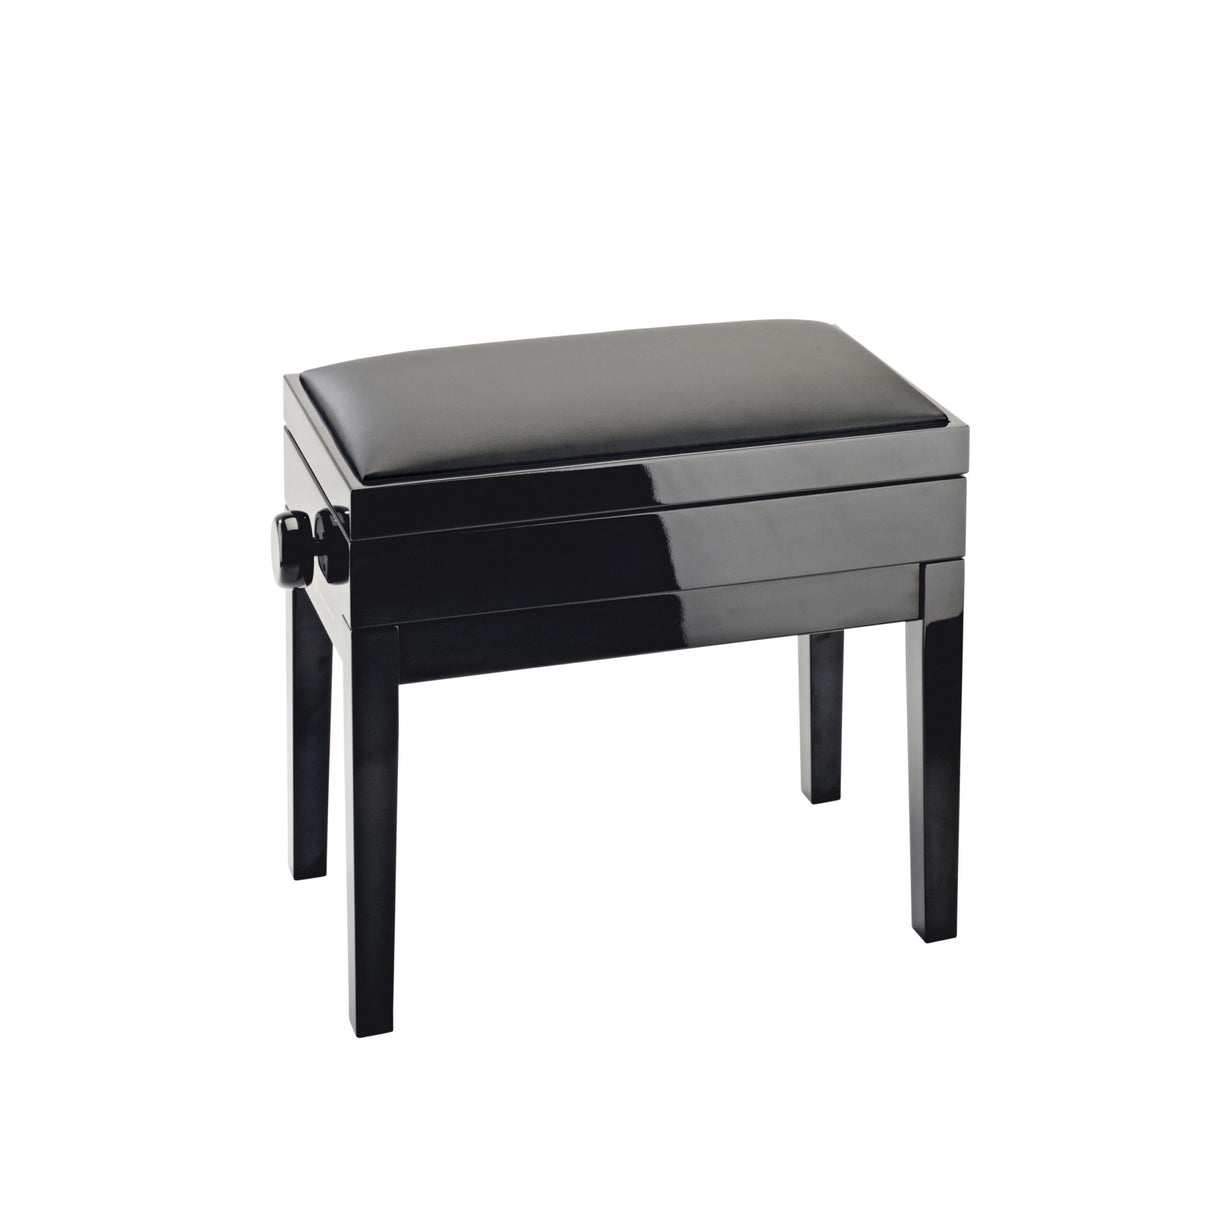 K&M 13951 Piano Bench with Sheet Music Storage, Black Glossy Finish Bench, Black Imitation Leather Seat